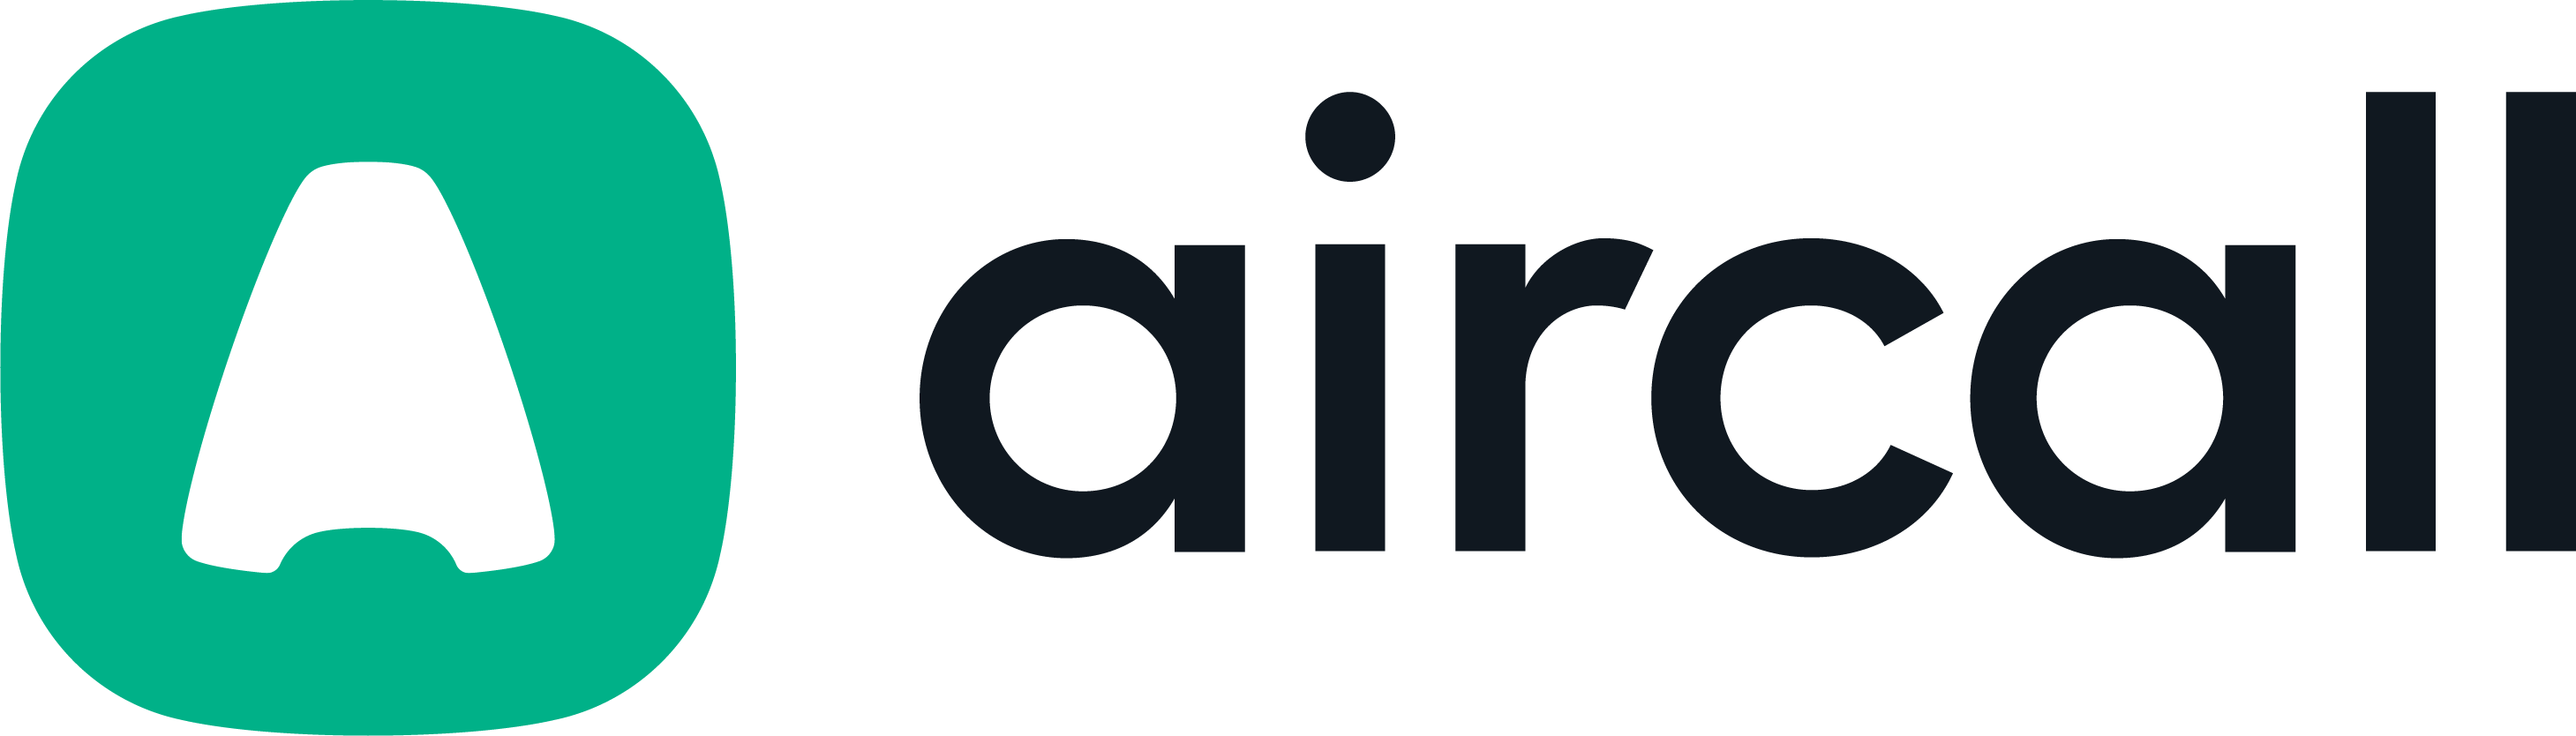 Aircall company logo